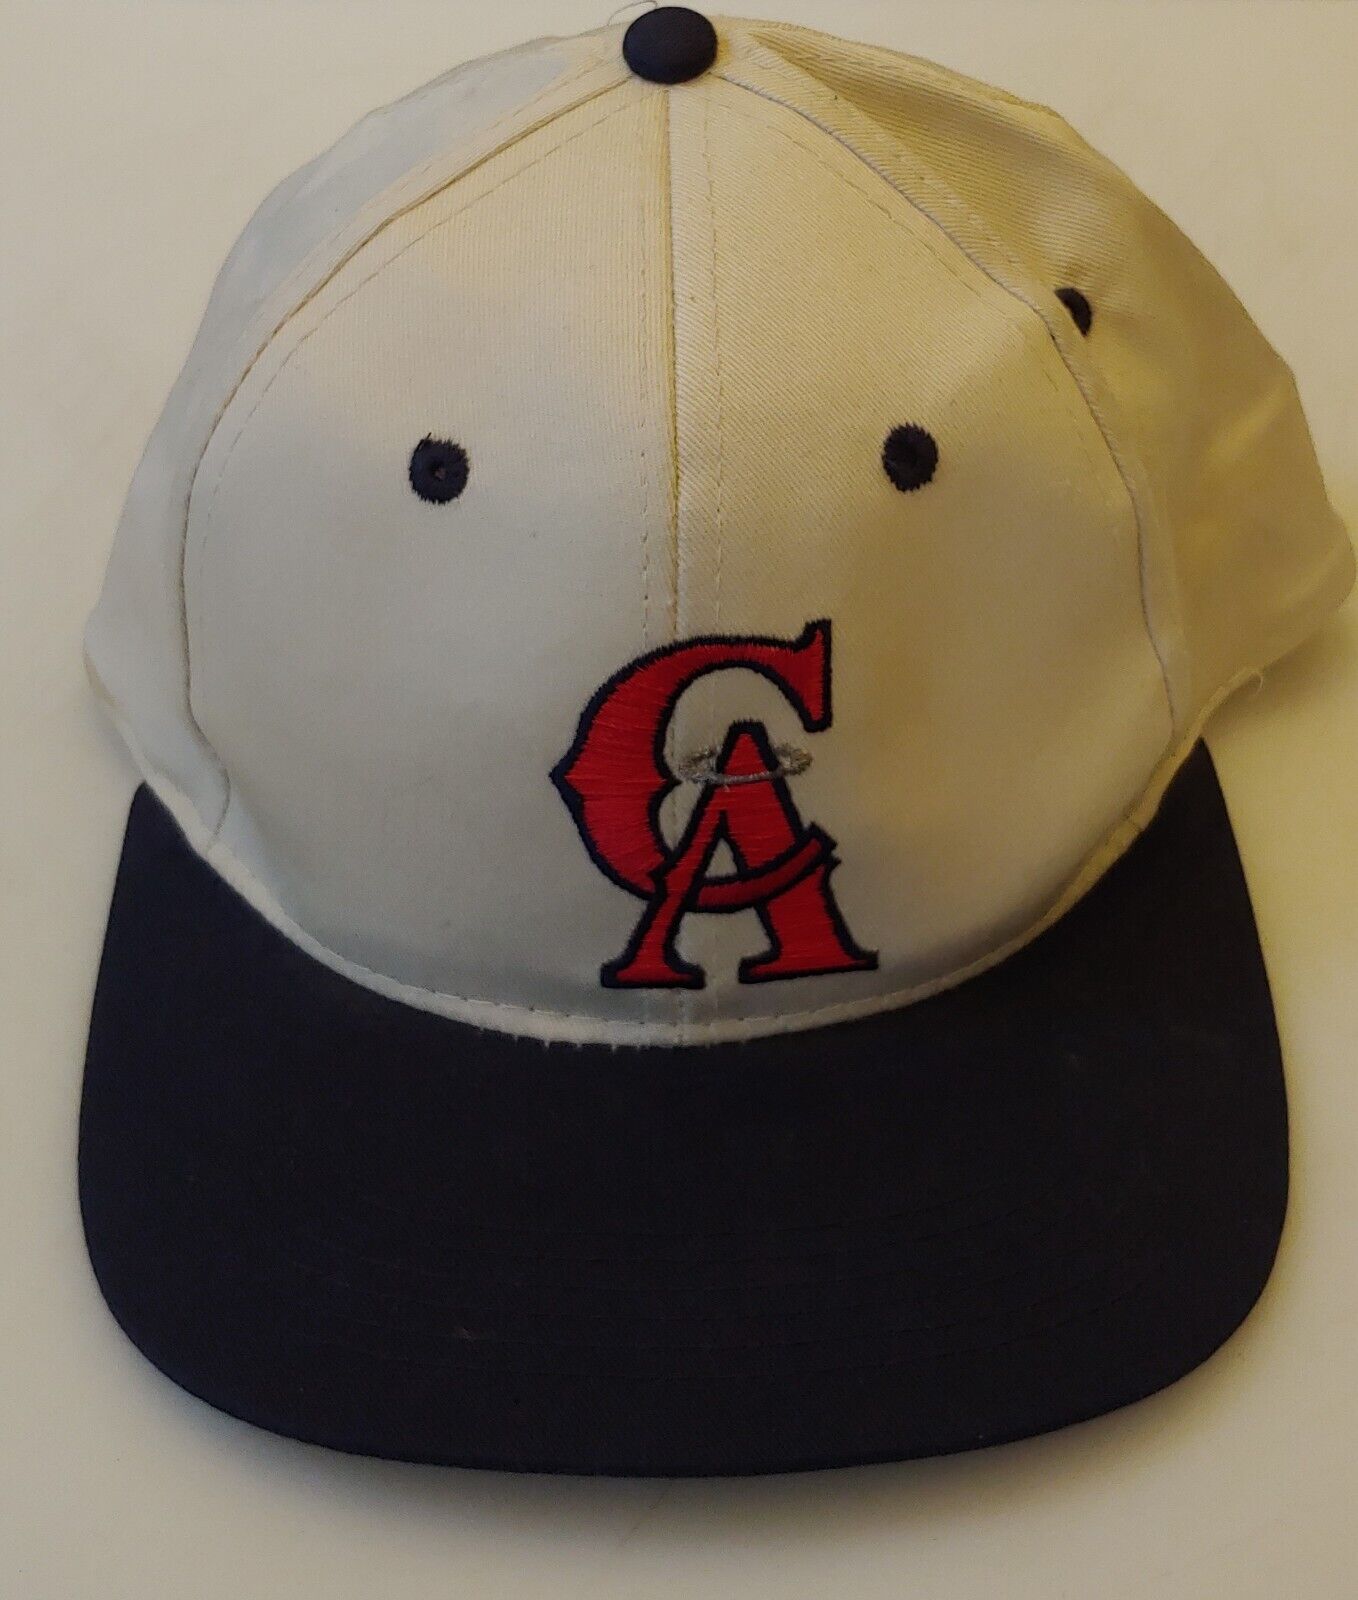 20% OFF on California Angel Season Ticket Holder Baseball Cap, 1996